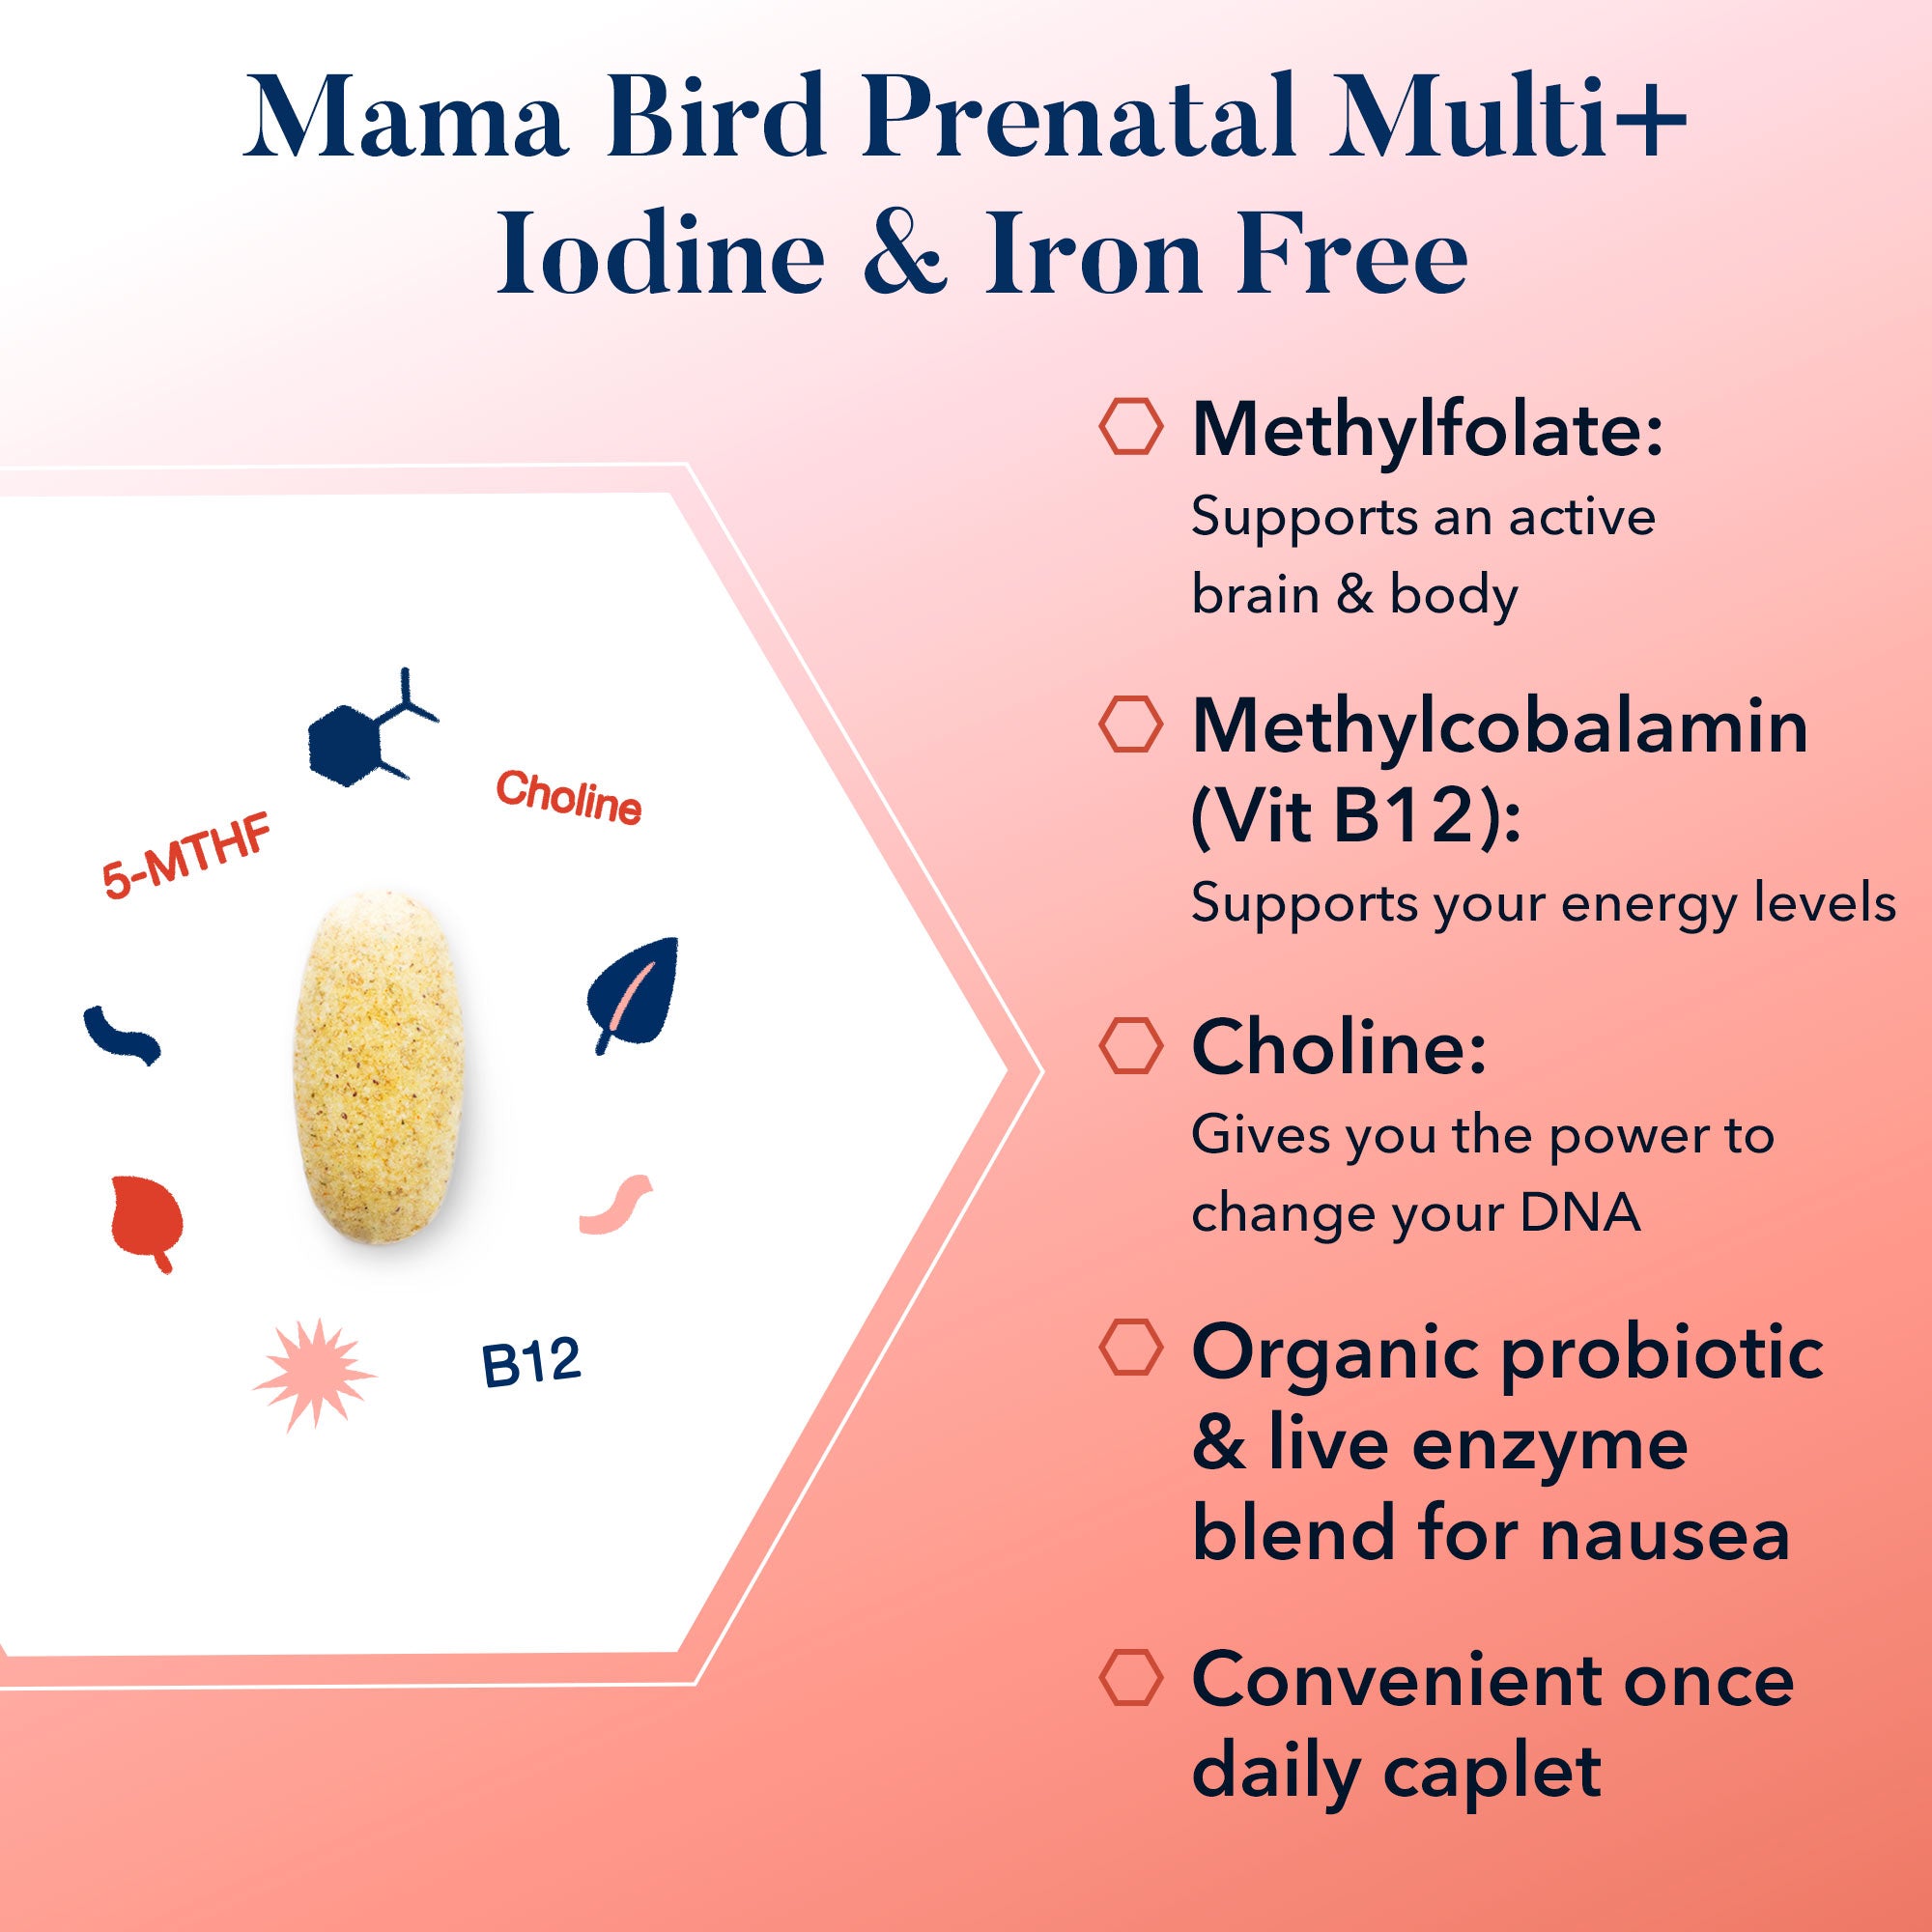 Mama Bird® Prenatal Multi+ Iodine & Iron Free